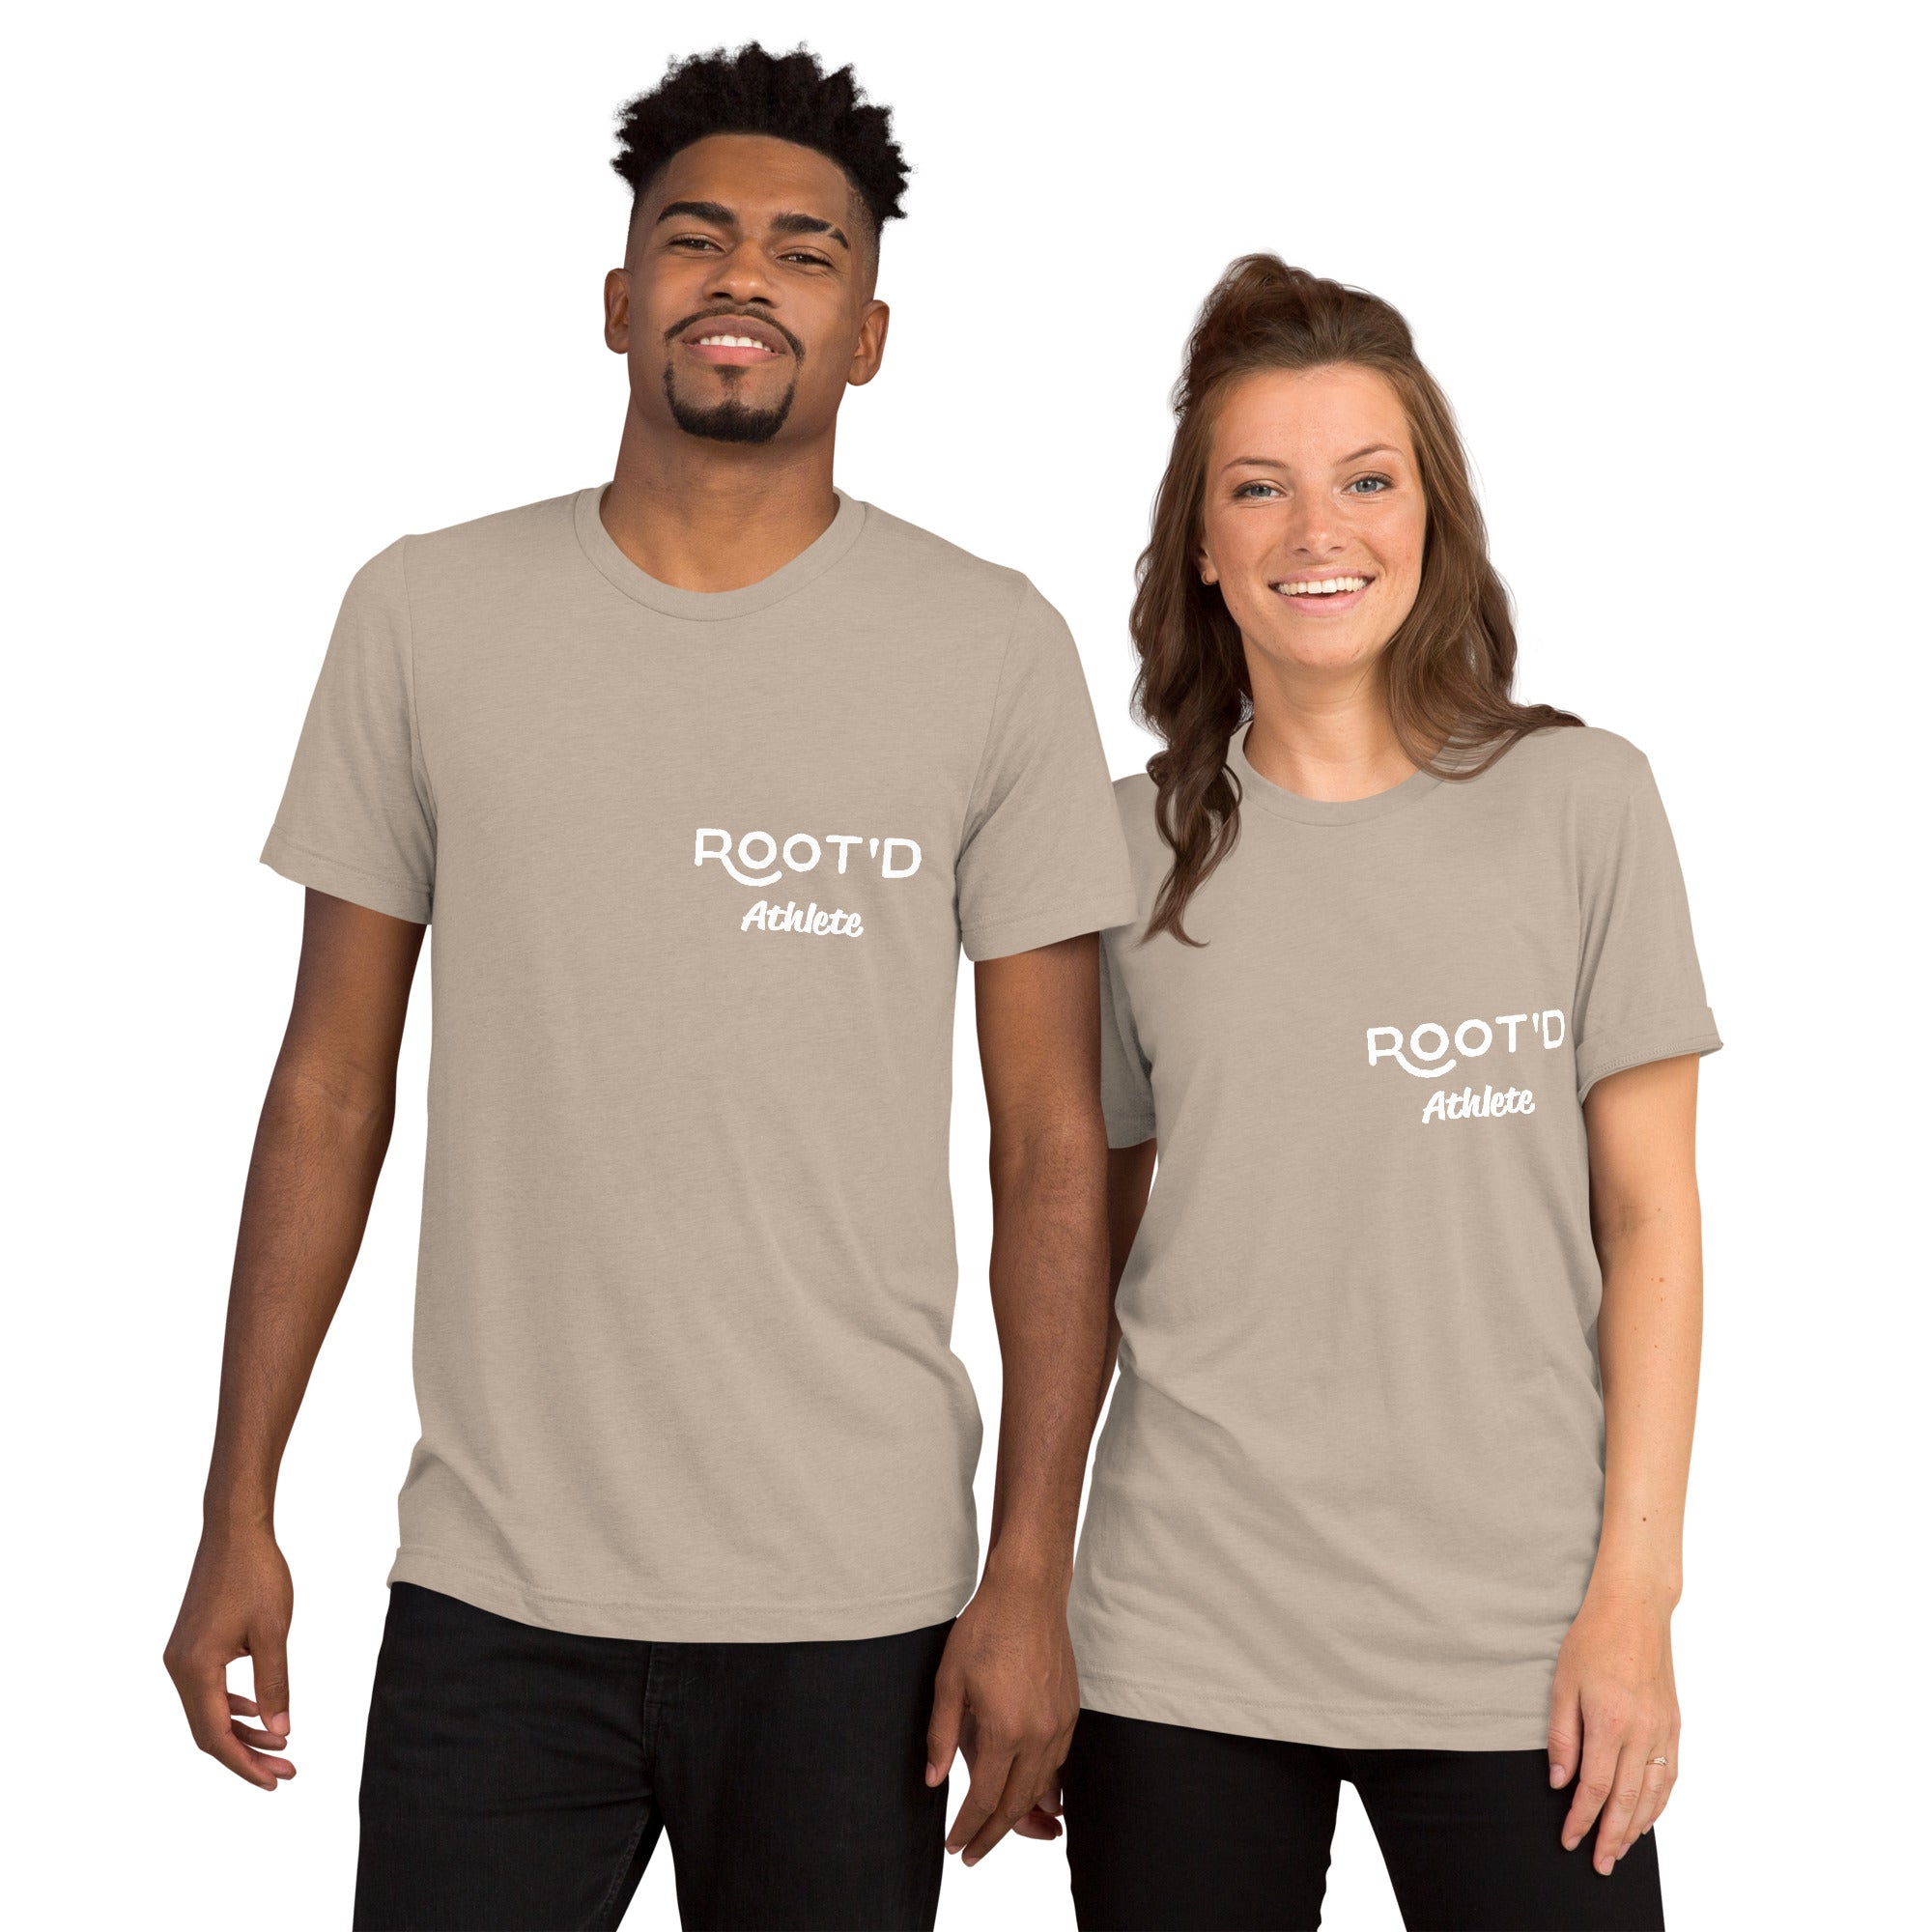 Root'd Athlete Premium Tri-blend T-Shirt - Unisex